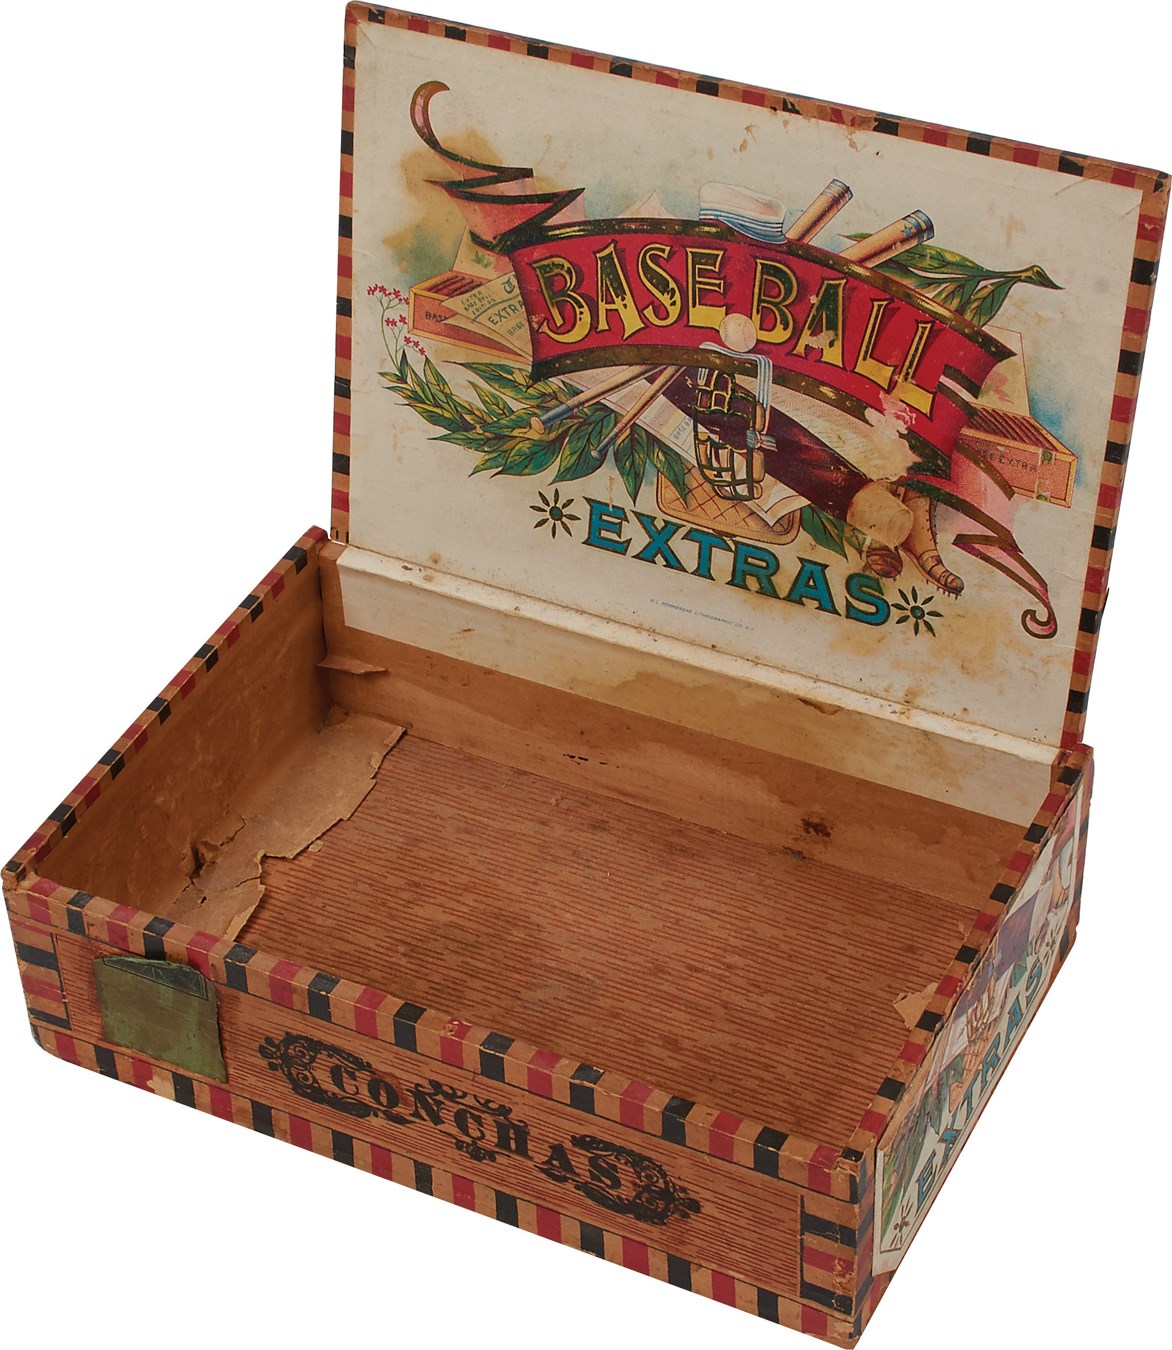 1880s "Baseball Extra" Cigar Box